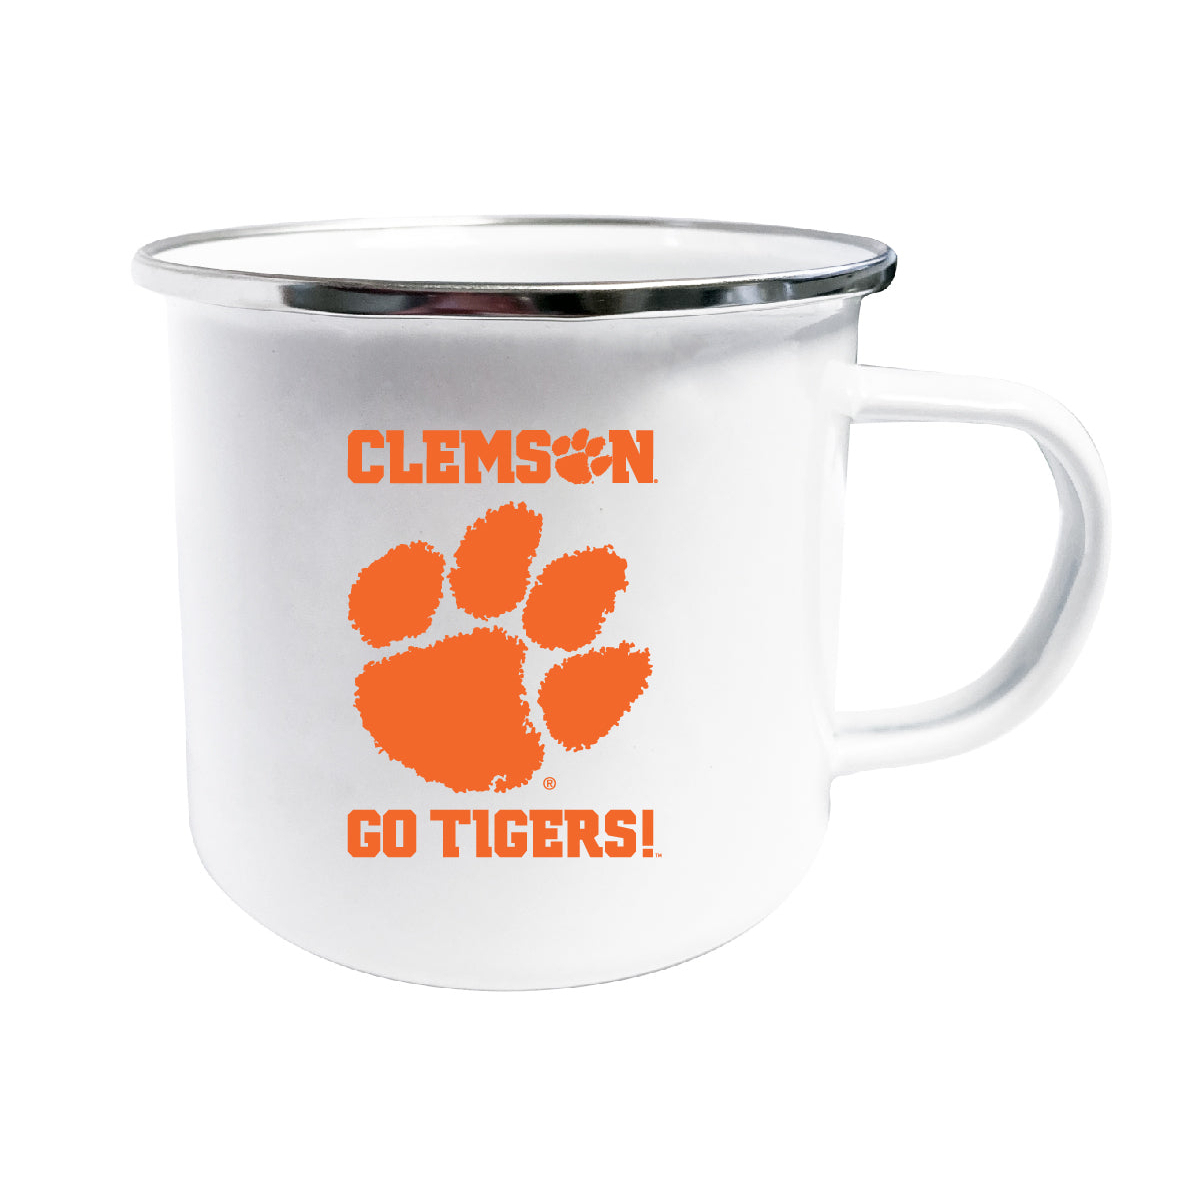 Clemson Tigers Tin Camper Coffee Mug - Choose Your Color